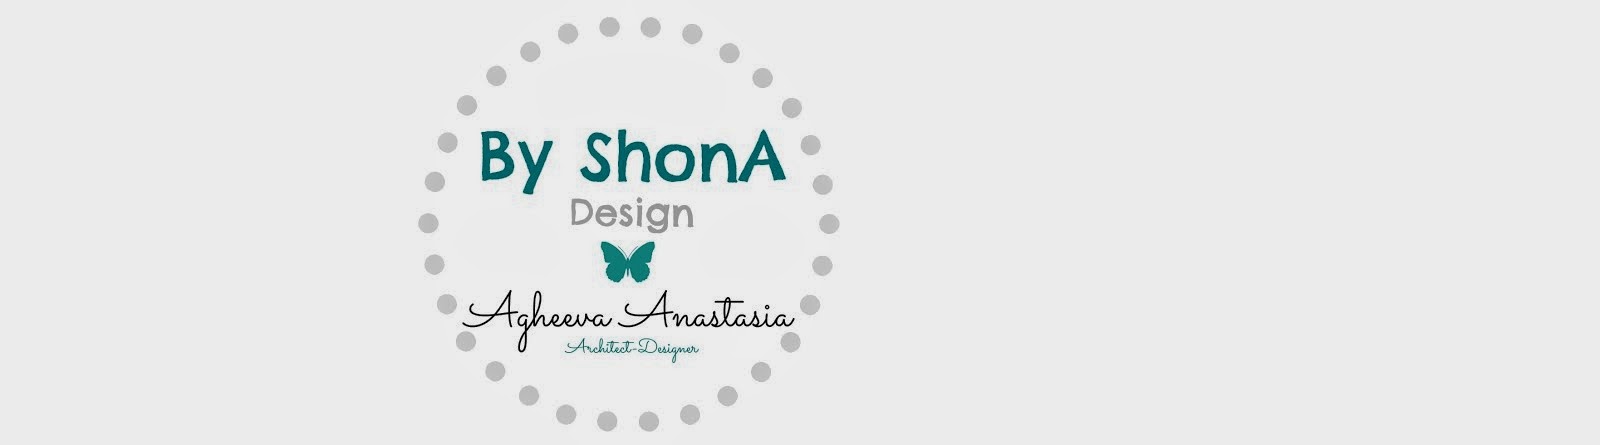 Design_ByShonA